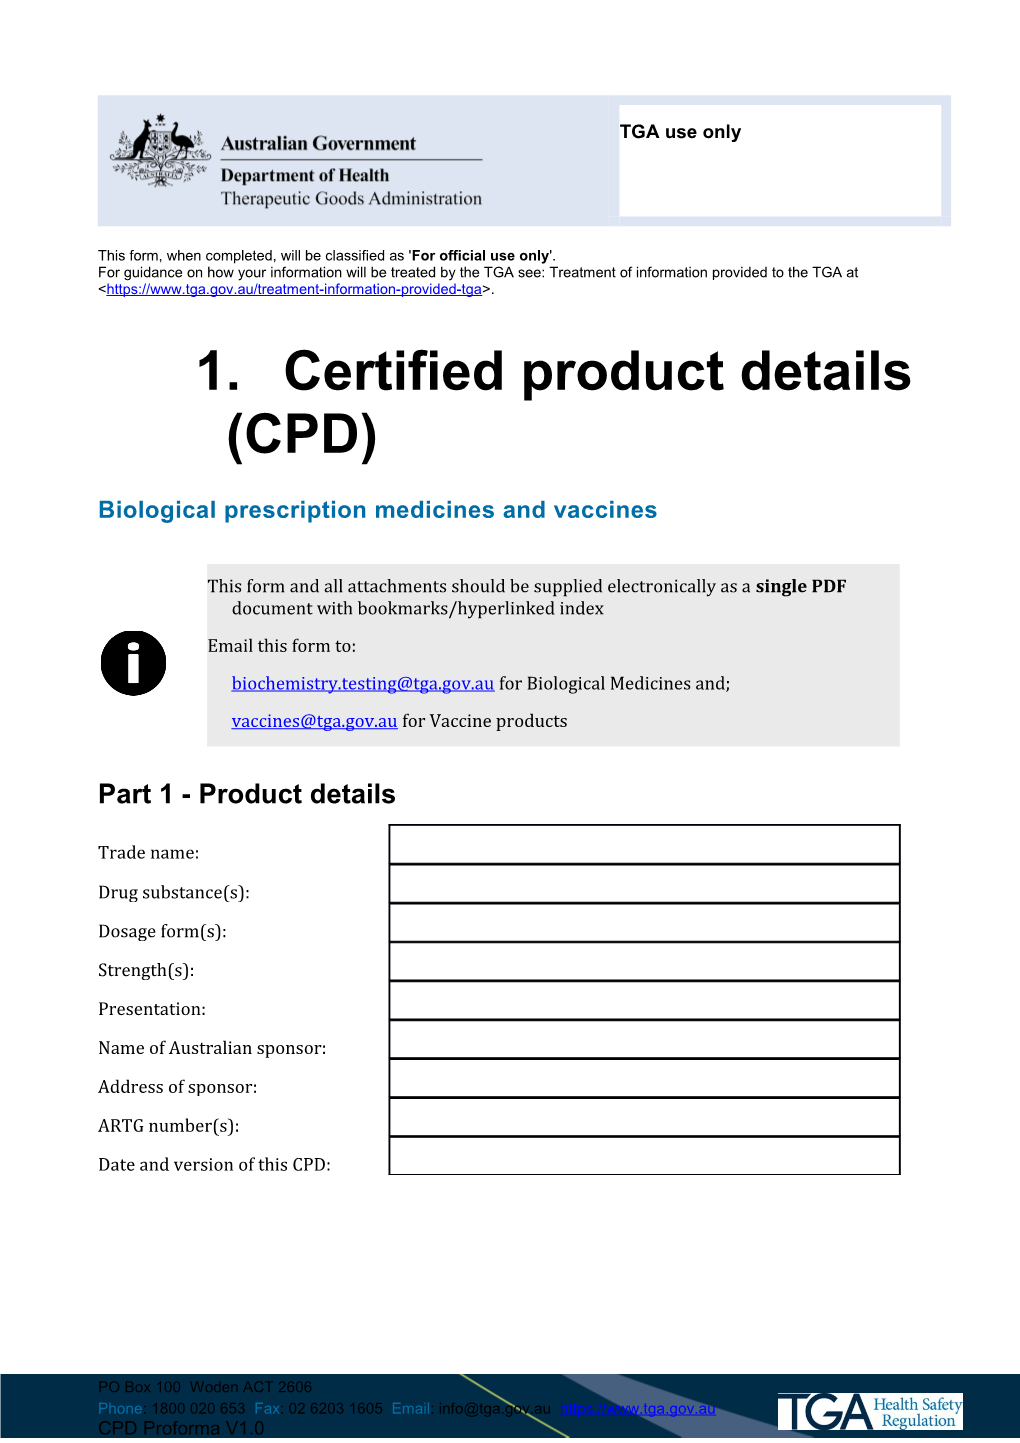 Certified Product Details (CPD) - Biological Prescription Medicines